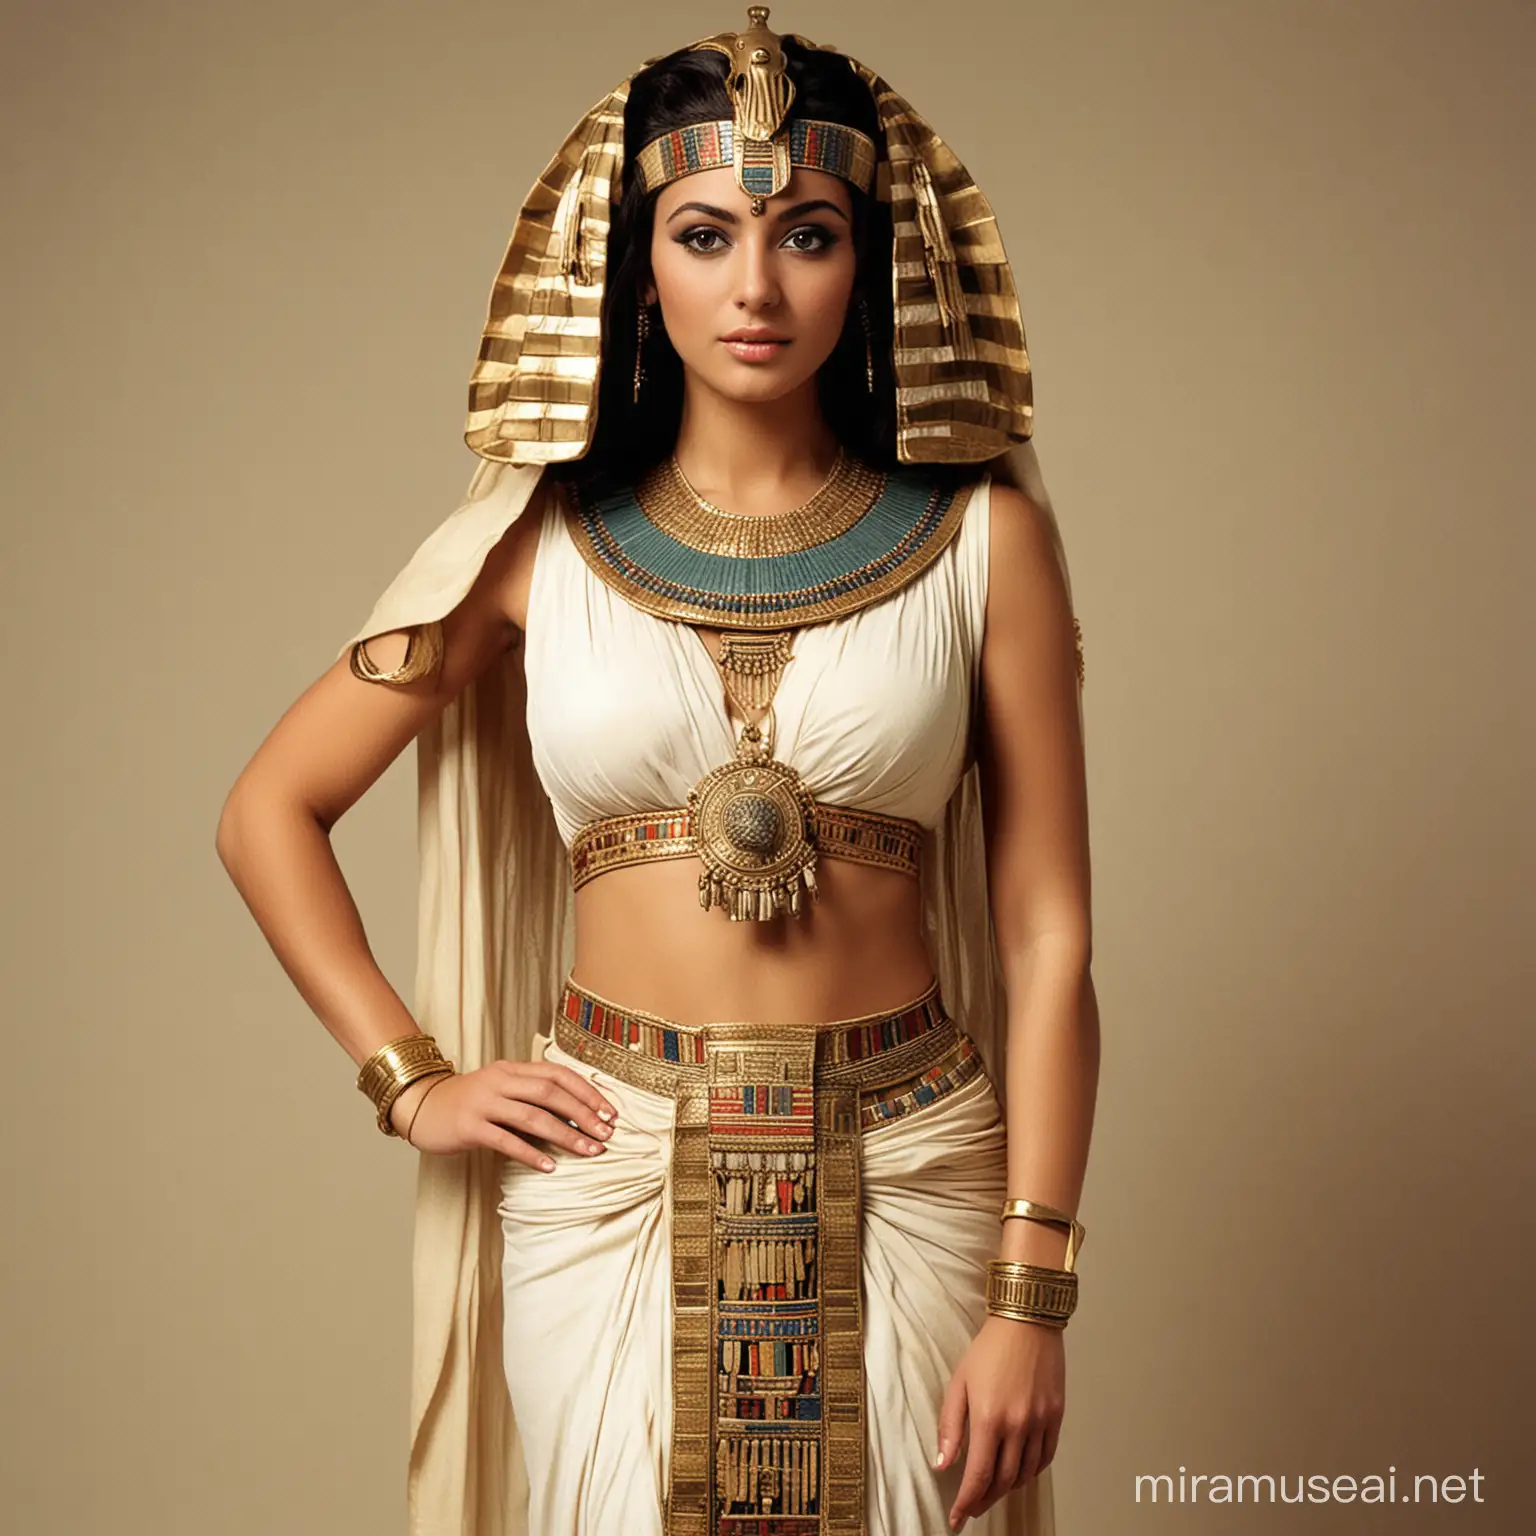 Sobekneferu in egyptian attire in 1900 BC. Should be busty